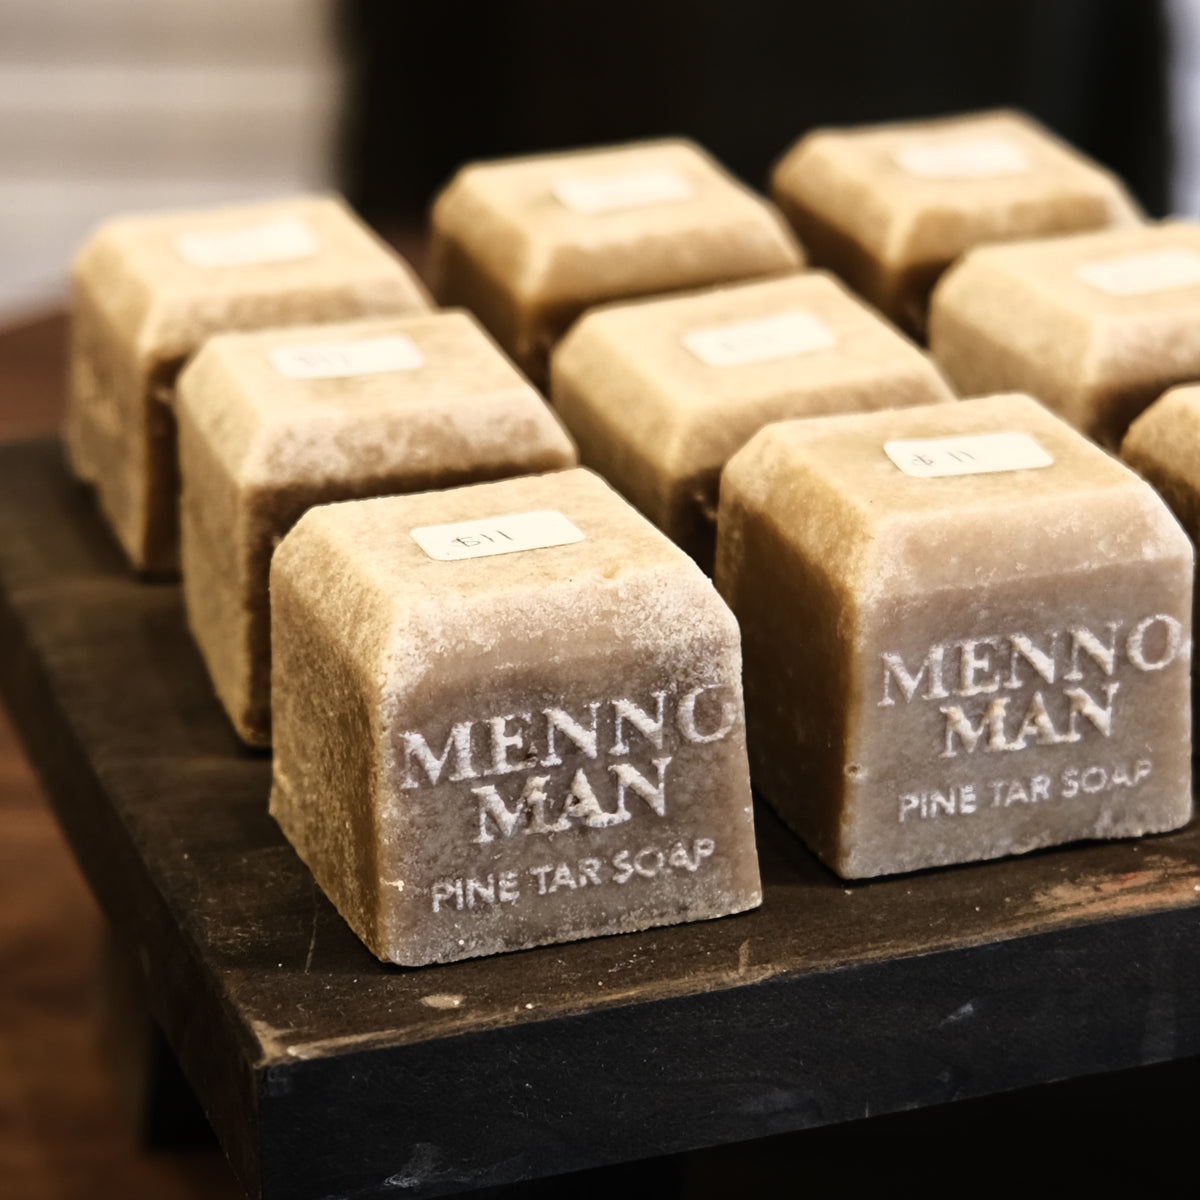 Menno Man Pine Tar Soap Menno Man Curt + Myr Co. Mennonite Store, La Crete, Alberta, Canada